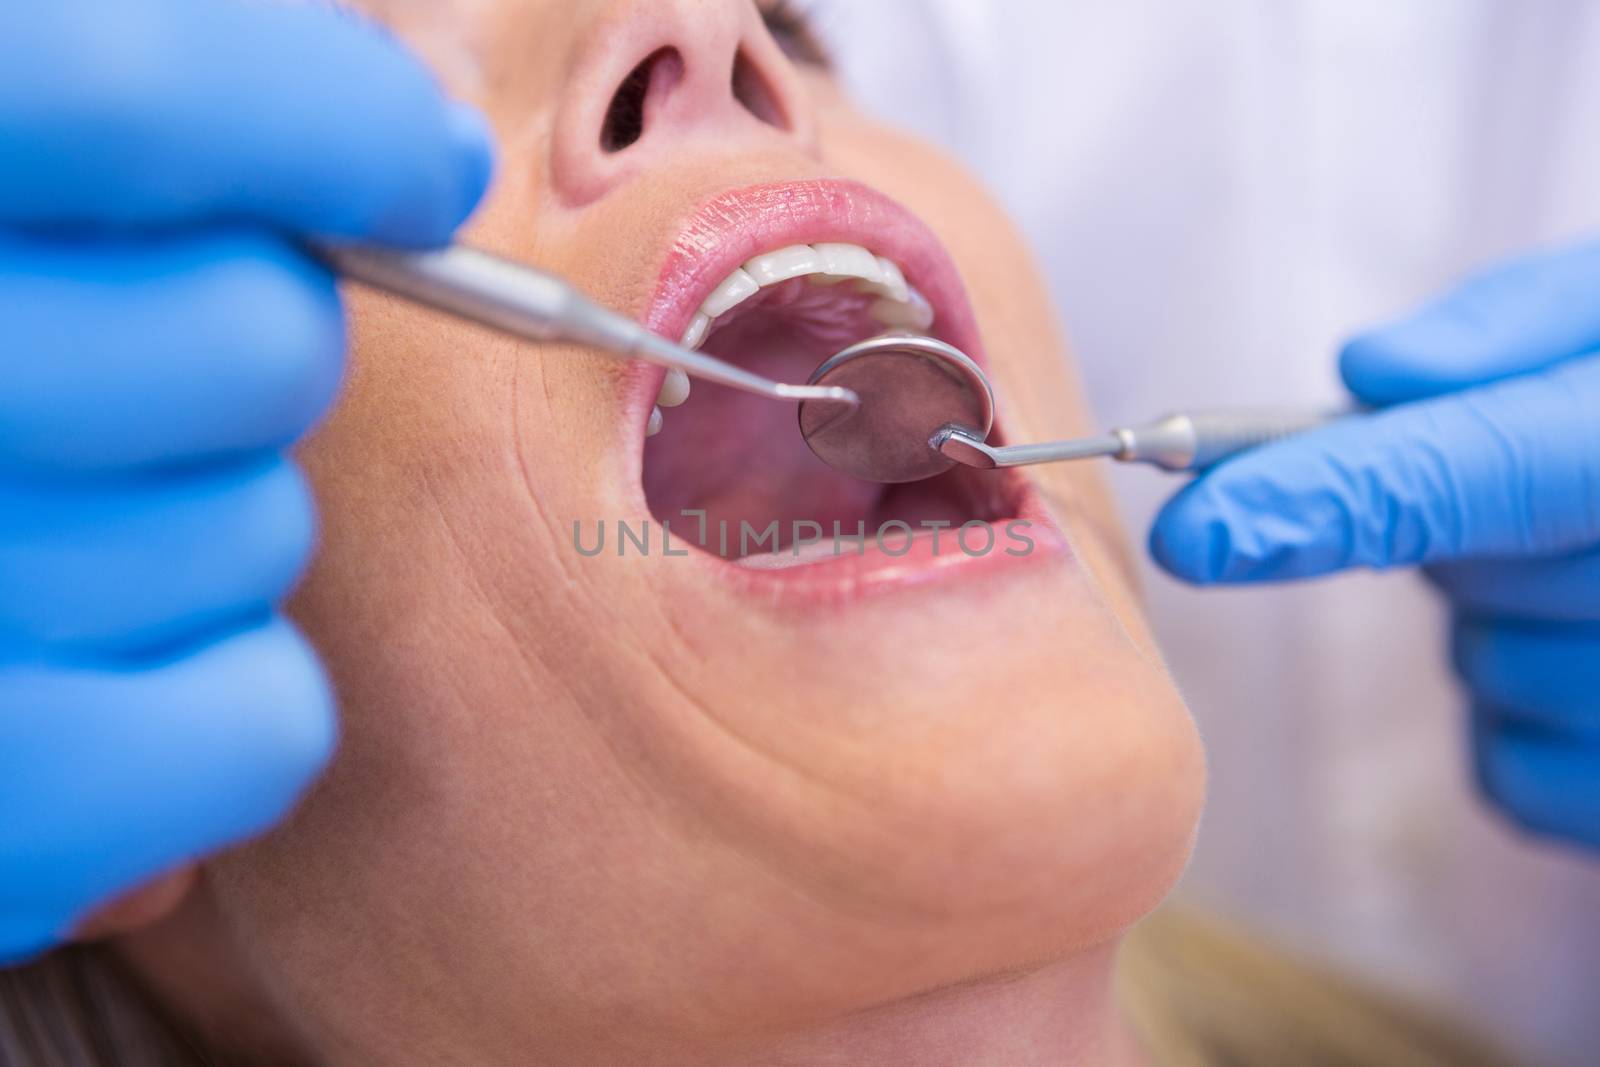 Dentist examining patient at medical clinic by Wavebreakmedia